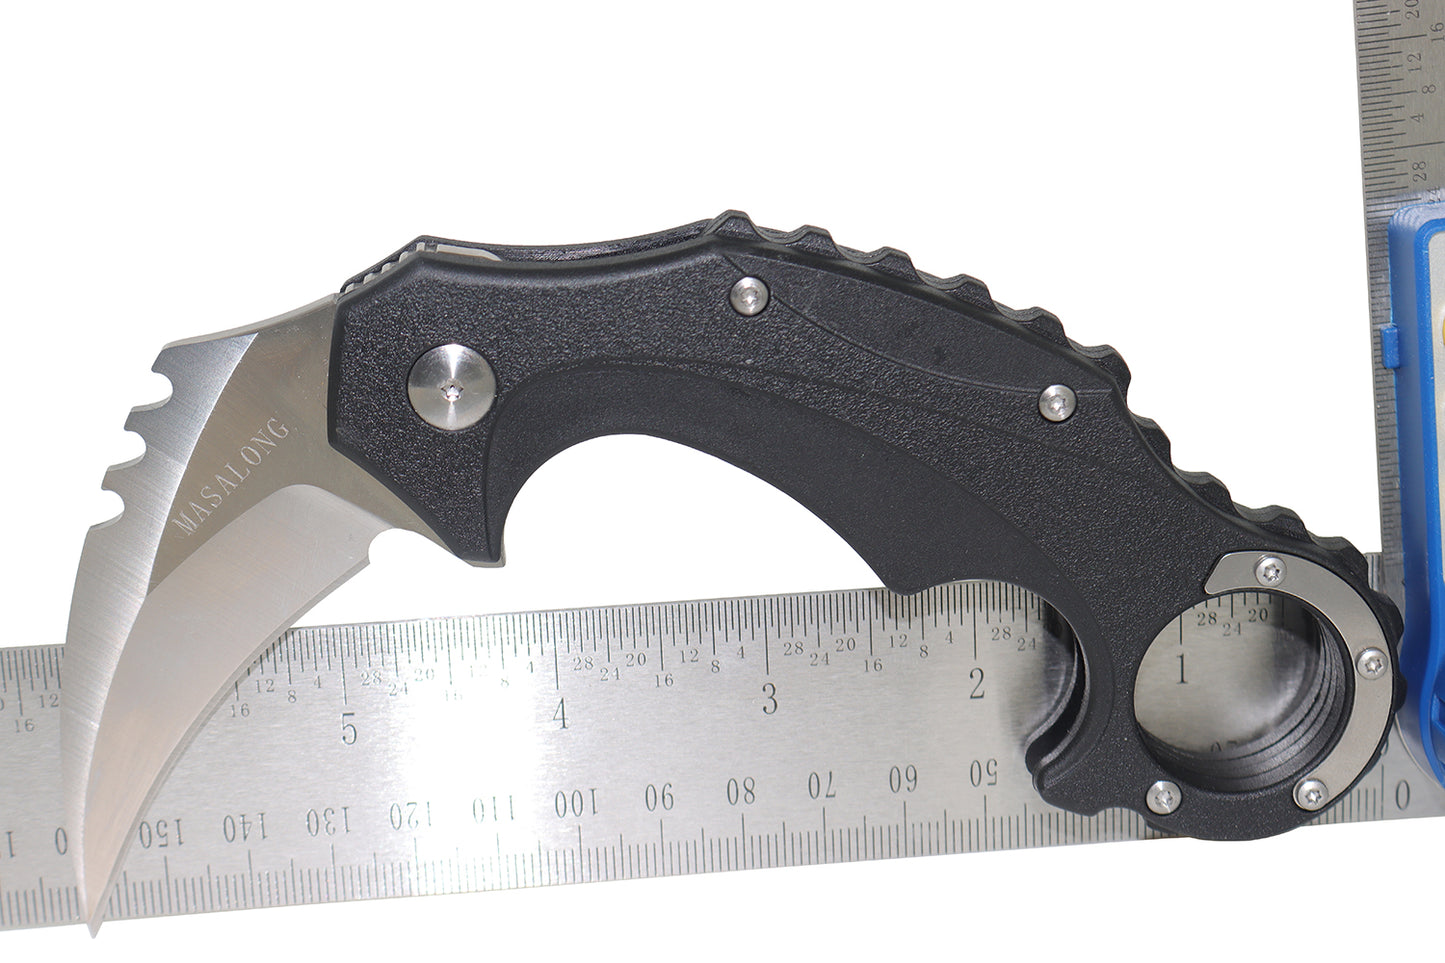 MASALONG kni189 Hard D2 steel blade folding claw karambit knife (Sanding blade Black handle)